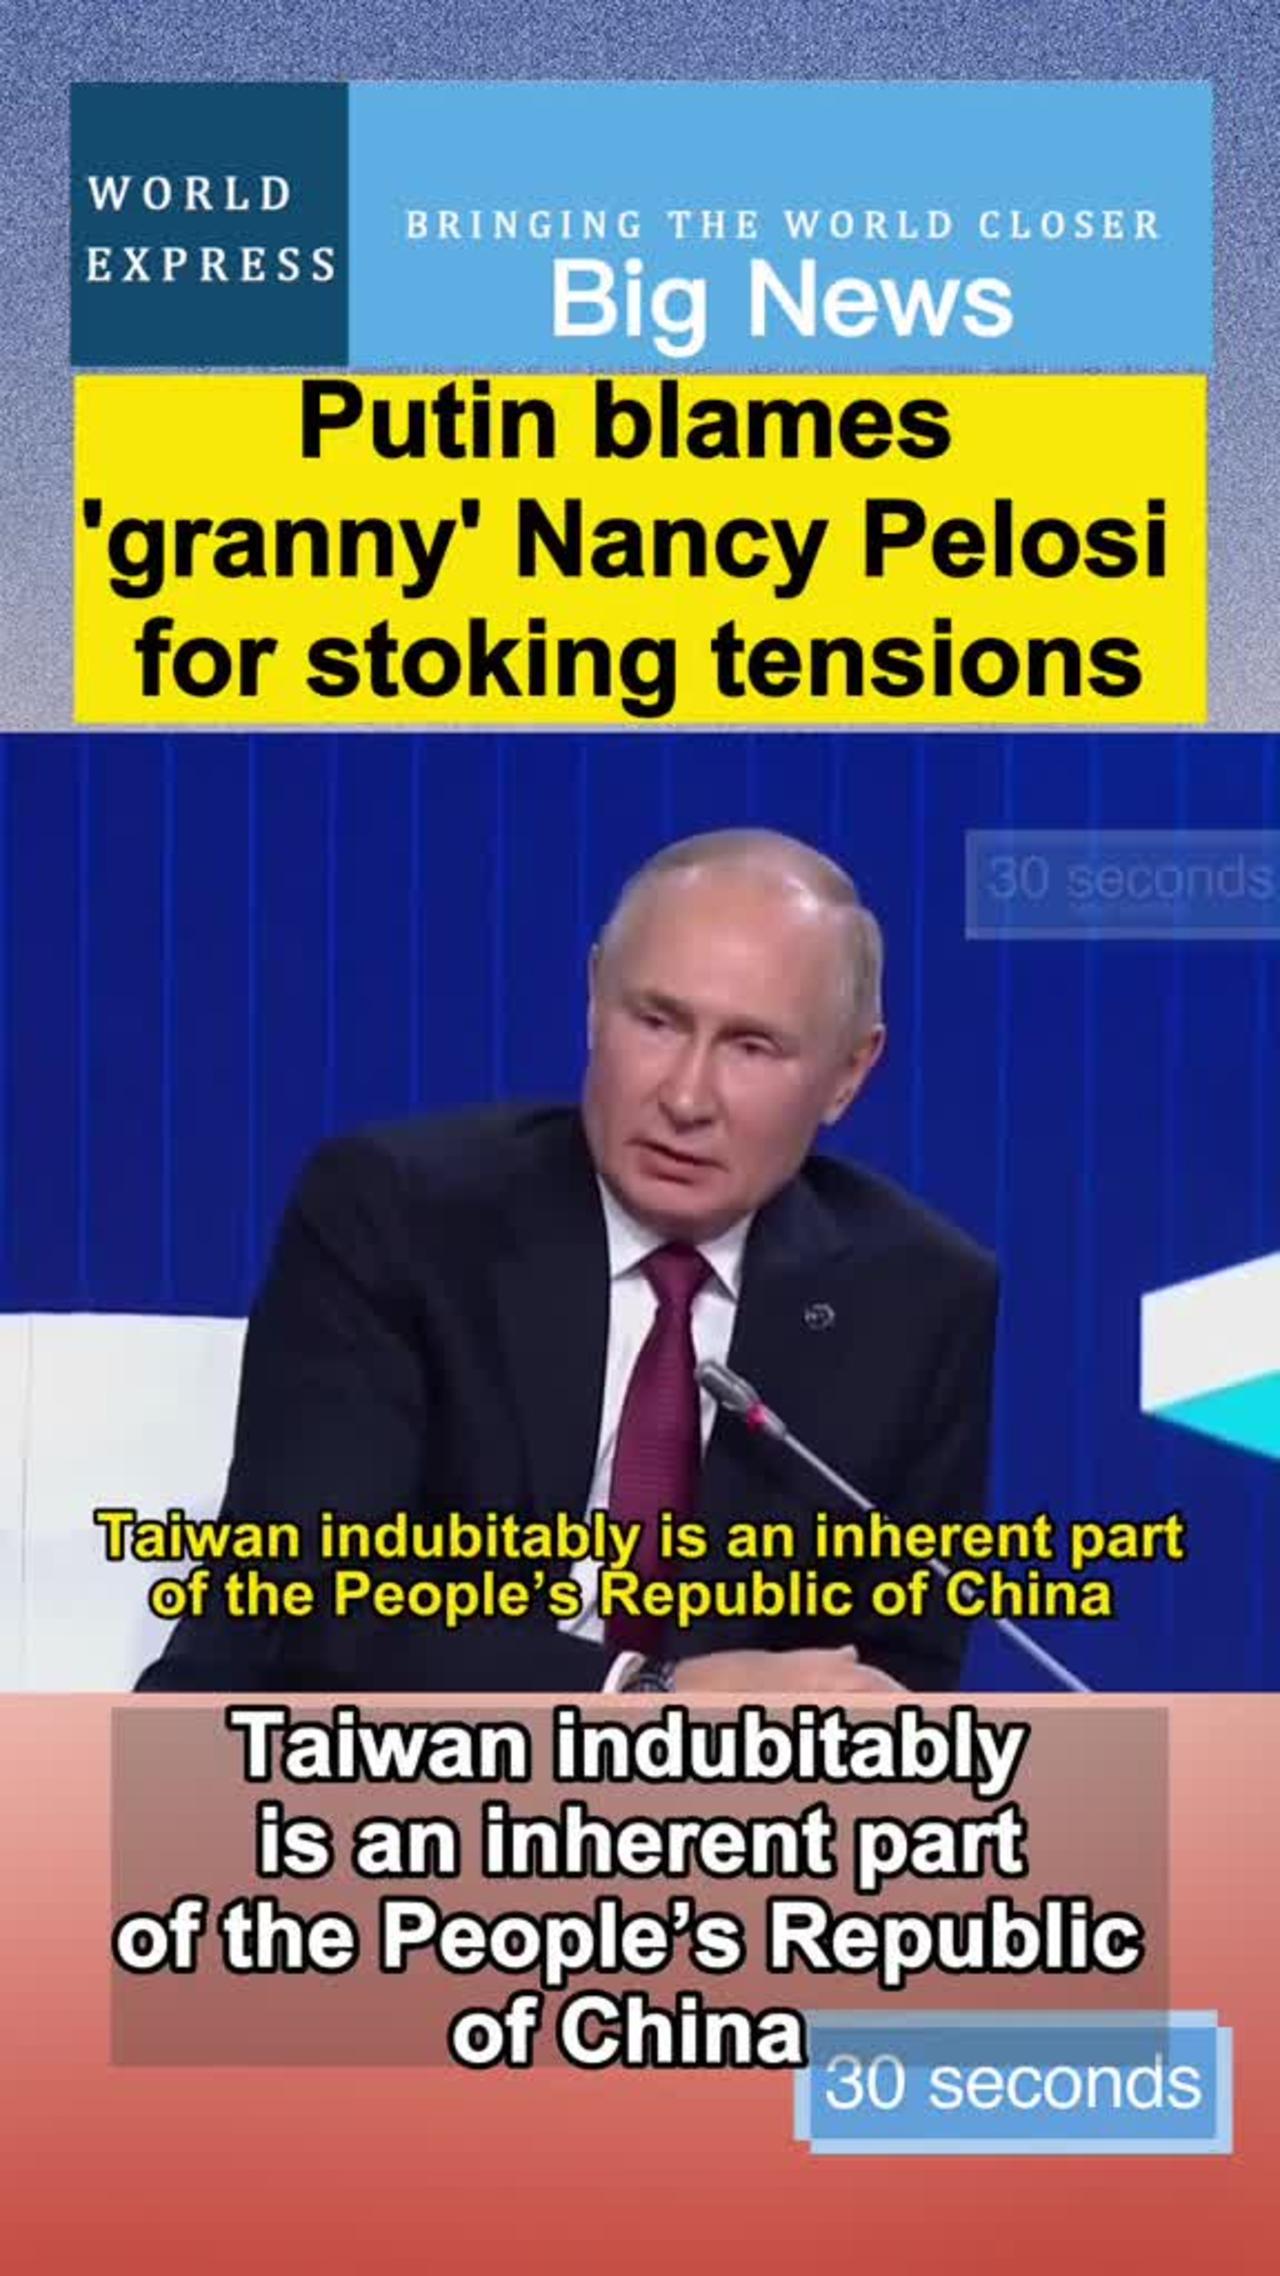 Putin blames 'granny' Nancy Pelosi for stoking tensions